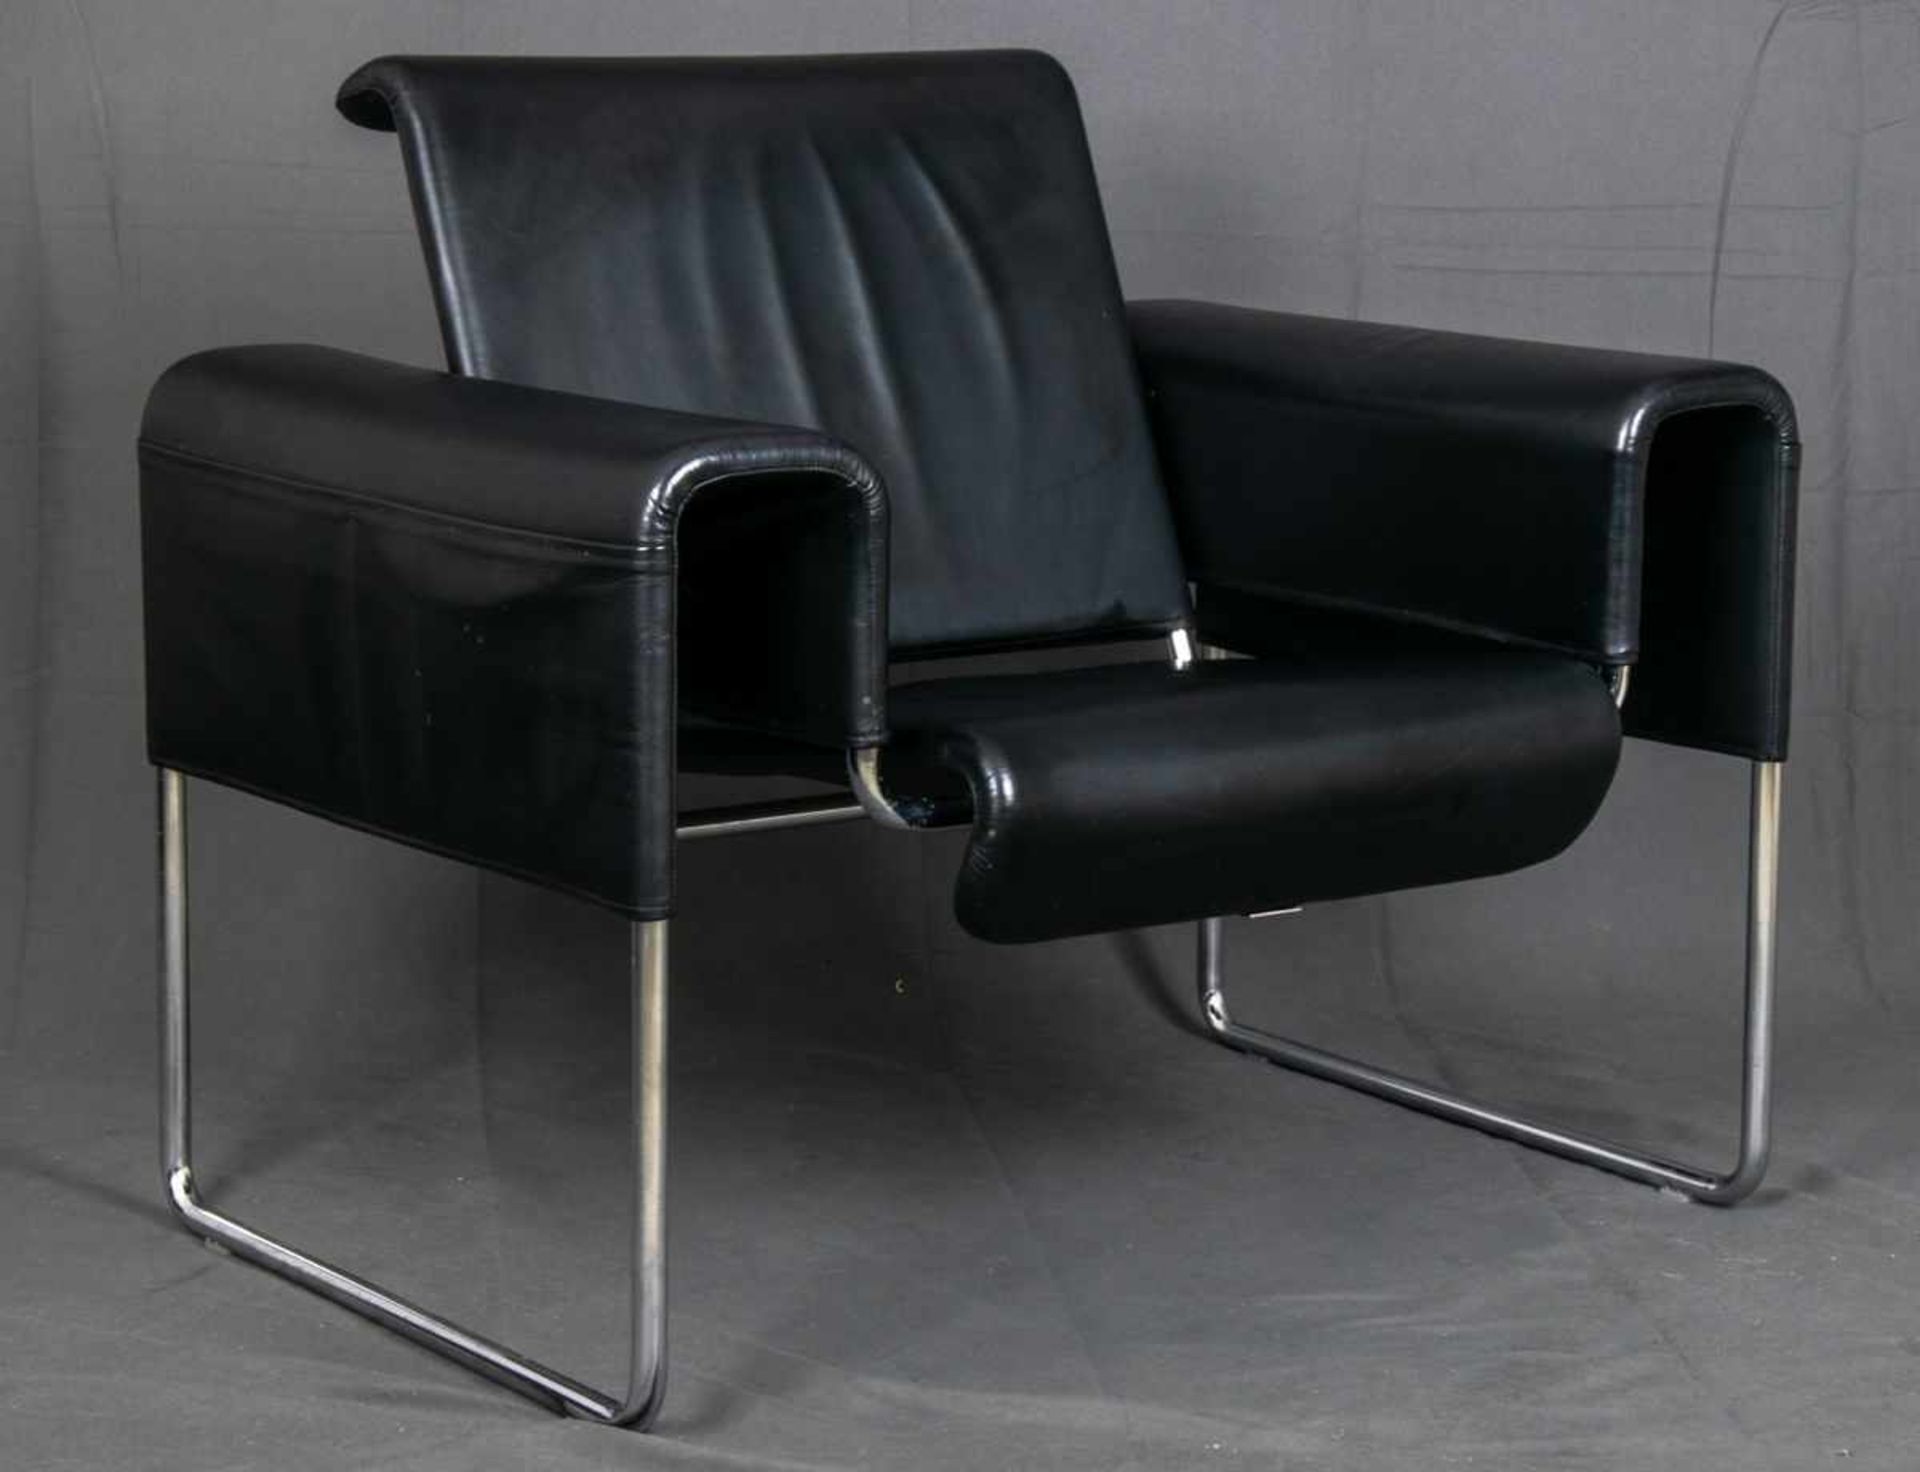 Lounge-Sessel "MOOD"-Design Studio 7.5, 2006. L & C ARNOLD, Stendal. Stahlrohrsessel mit schwarzer